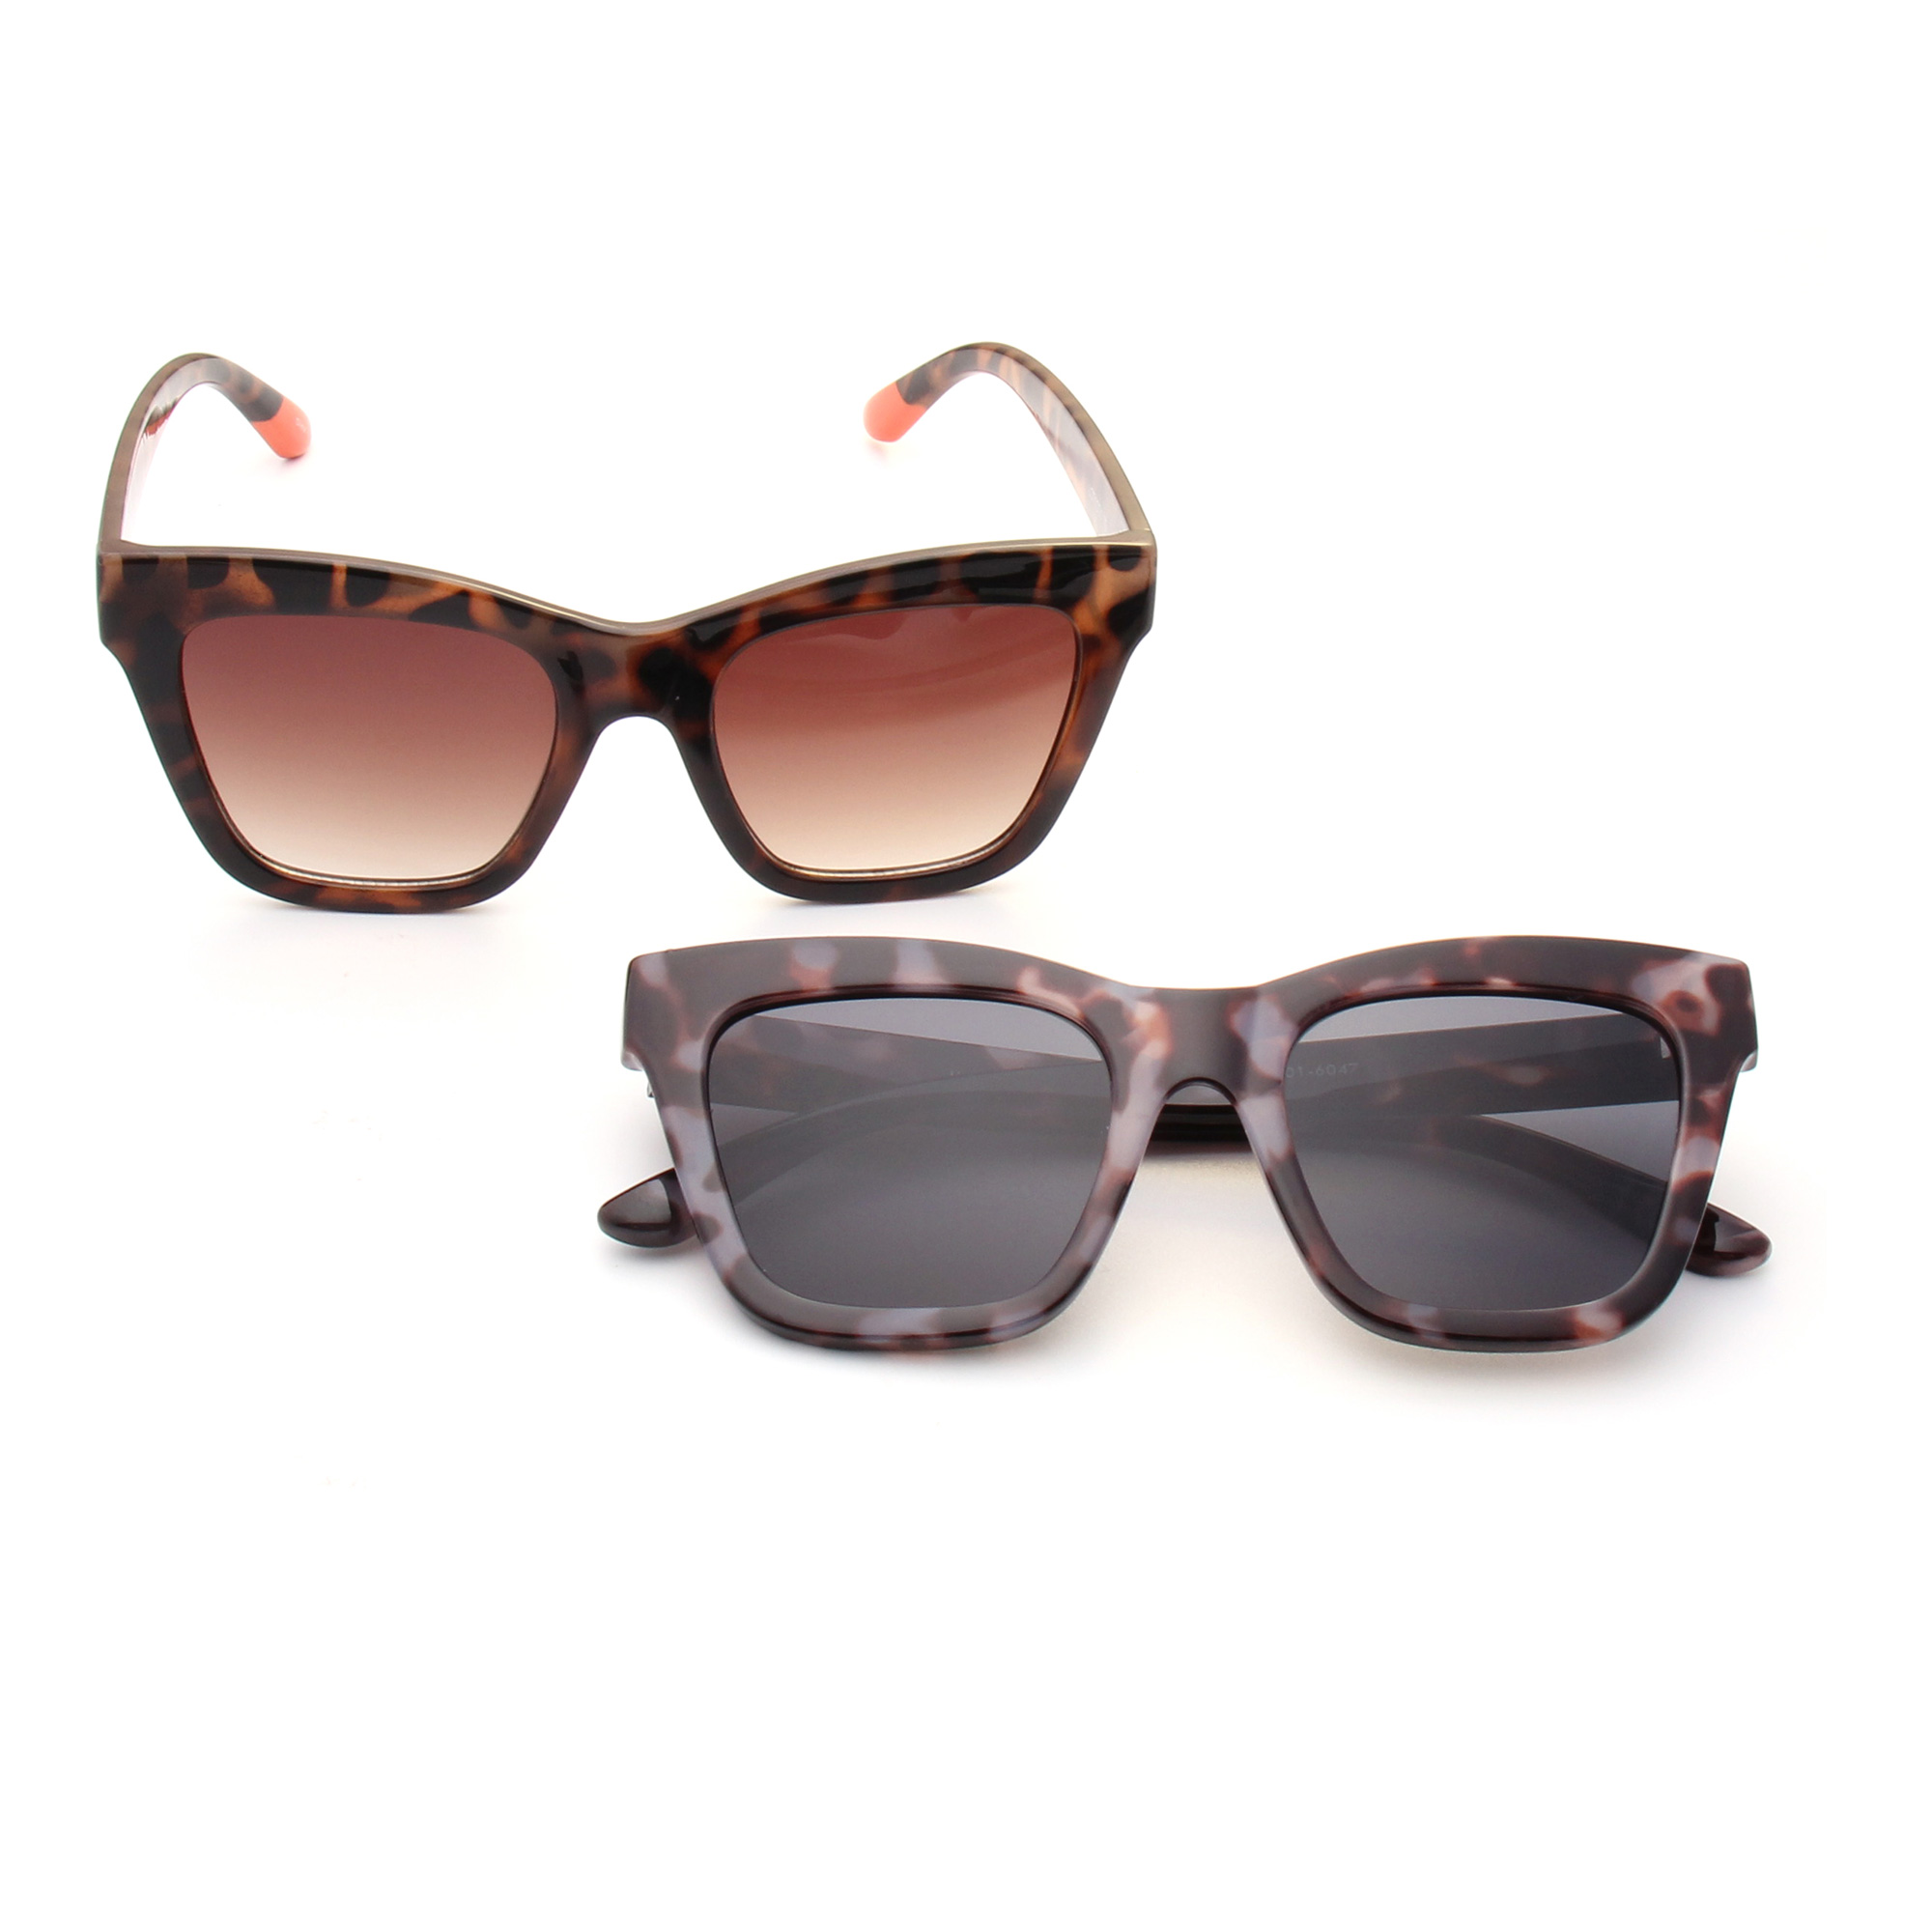 Eugenia bulk womens sunglasses national standard for fashion-1